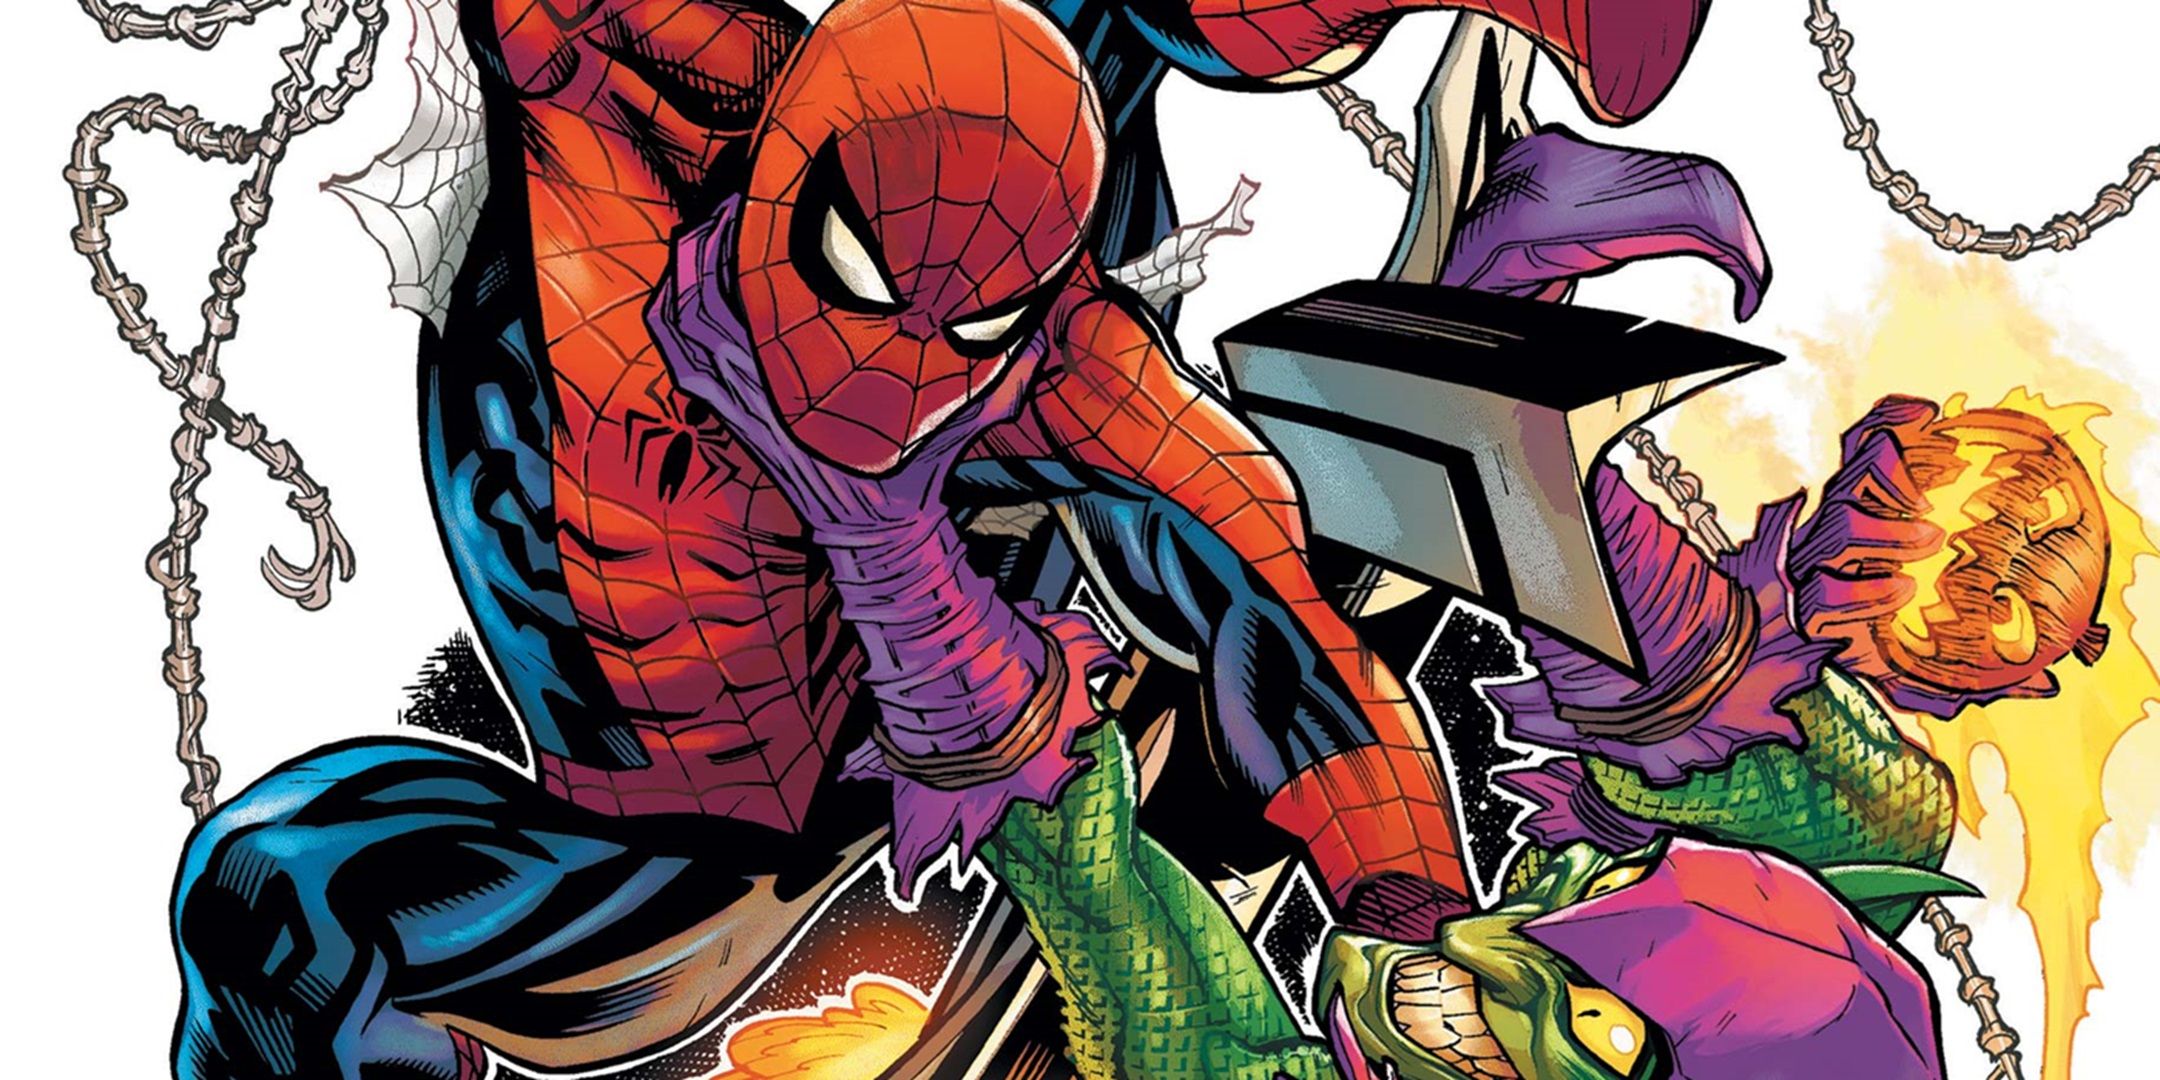 Spider-Man fights the Green Goblin